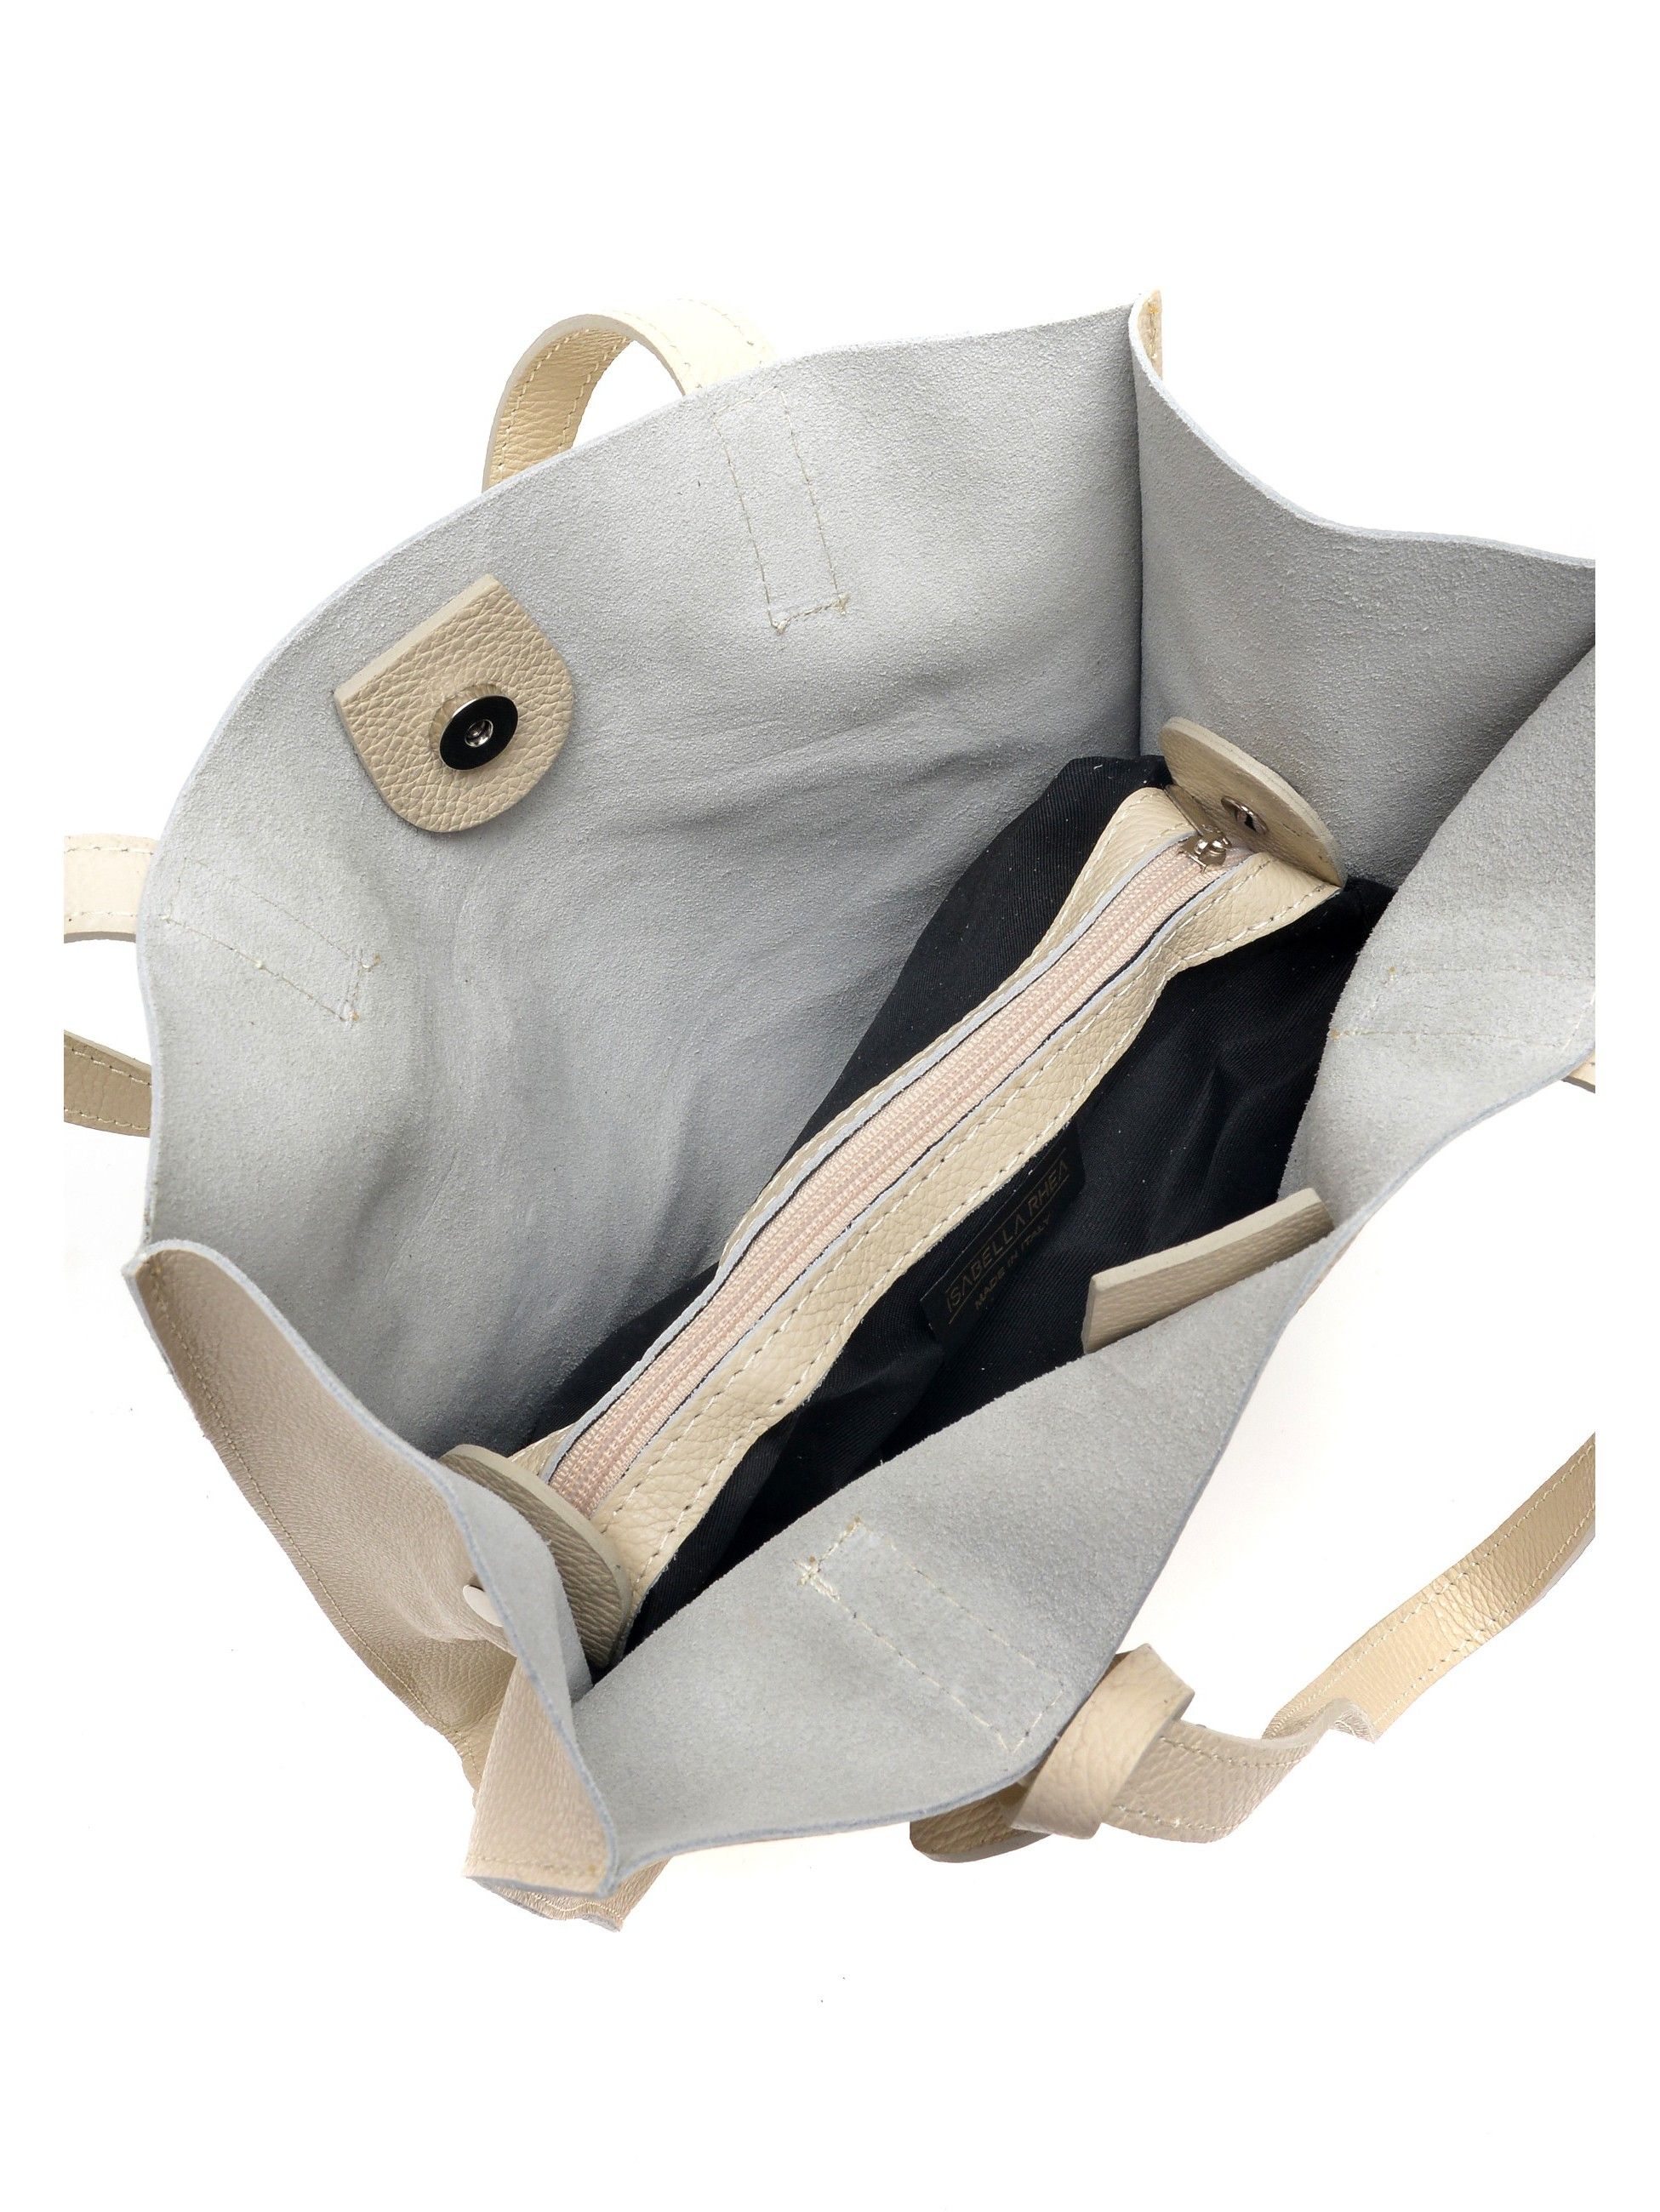 Shoulder Bag
100% cow leather
Two top handles 60 cm
Top magnetic snap closure
Interior zip pocket
Dimensions: 33x31x9 cm